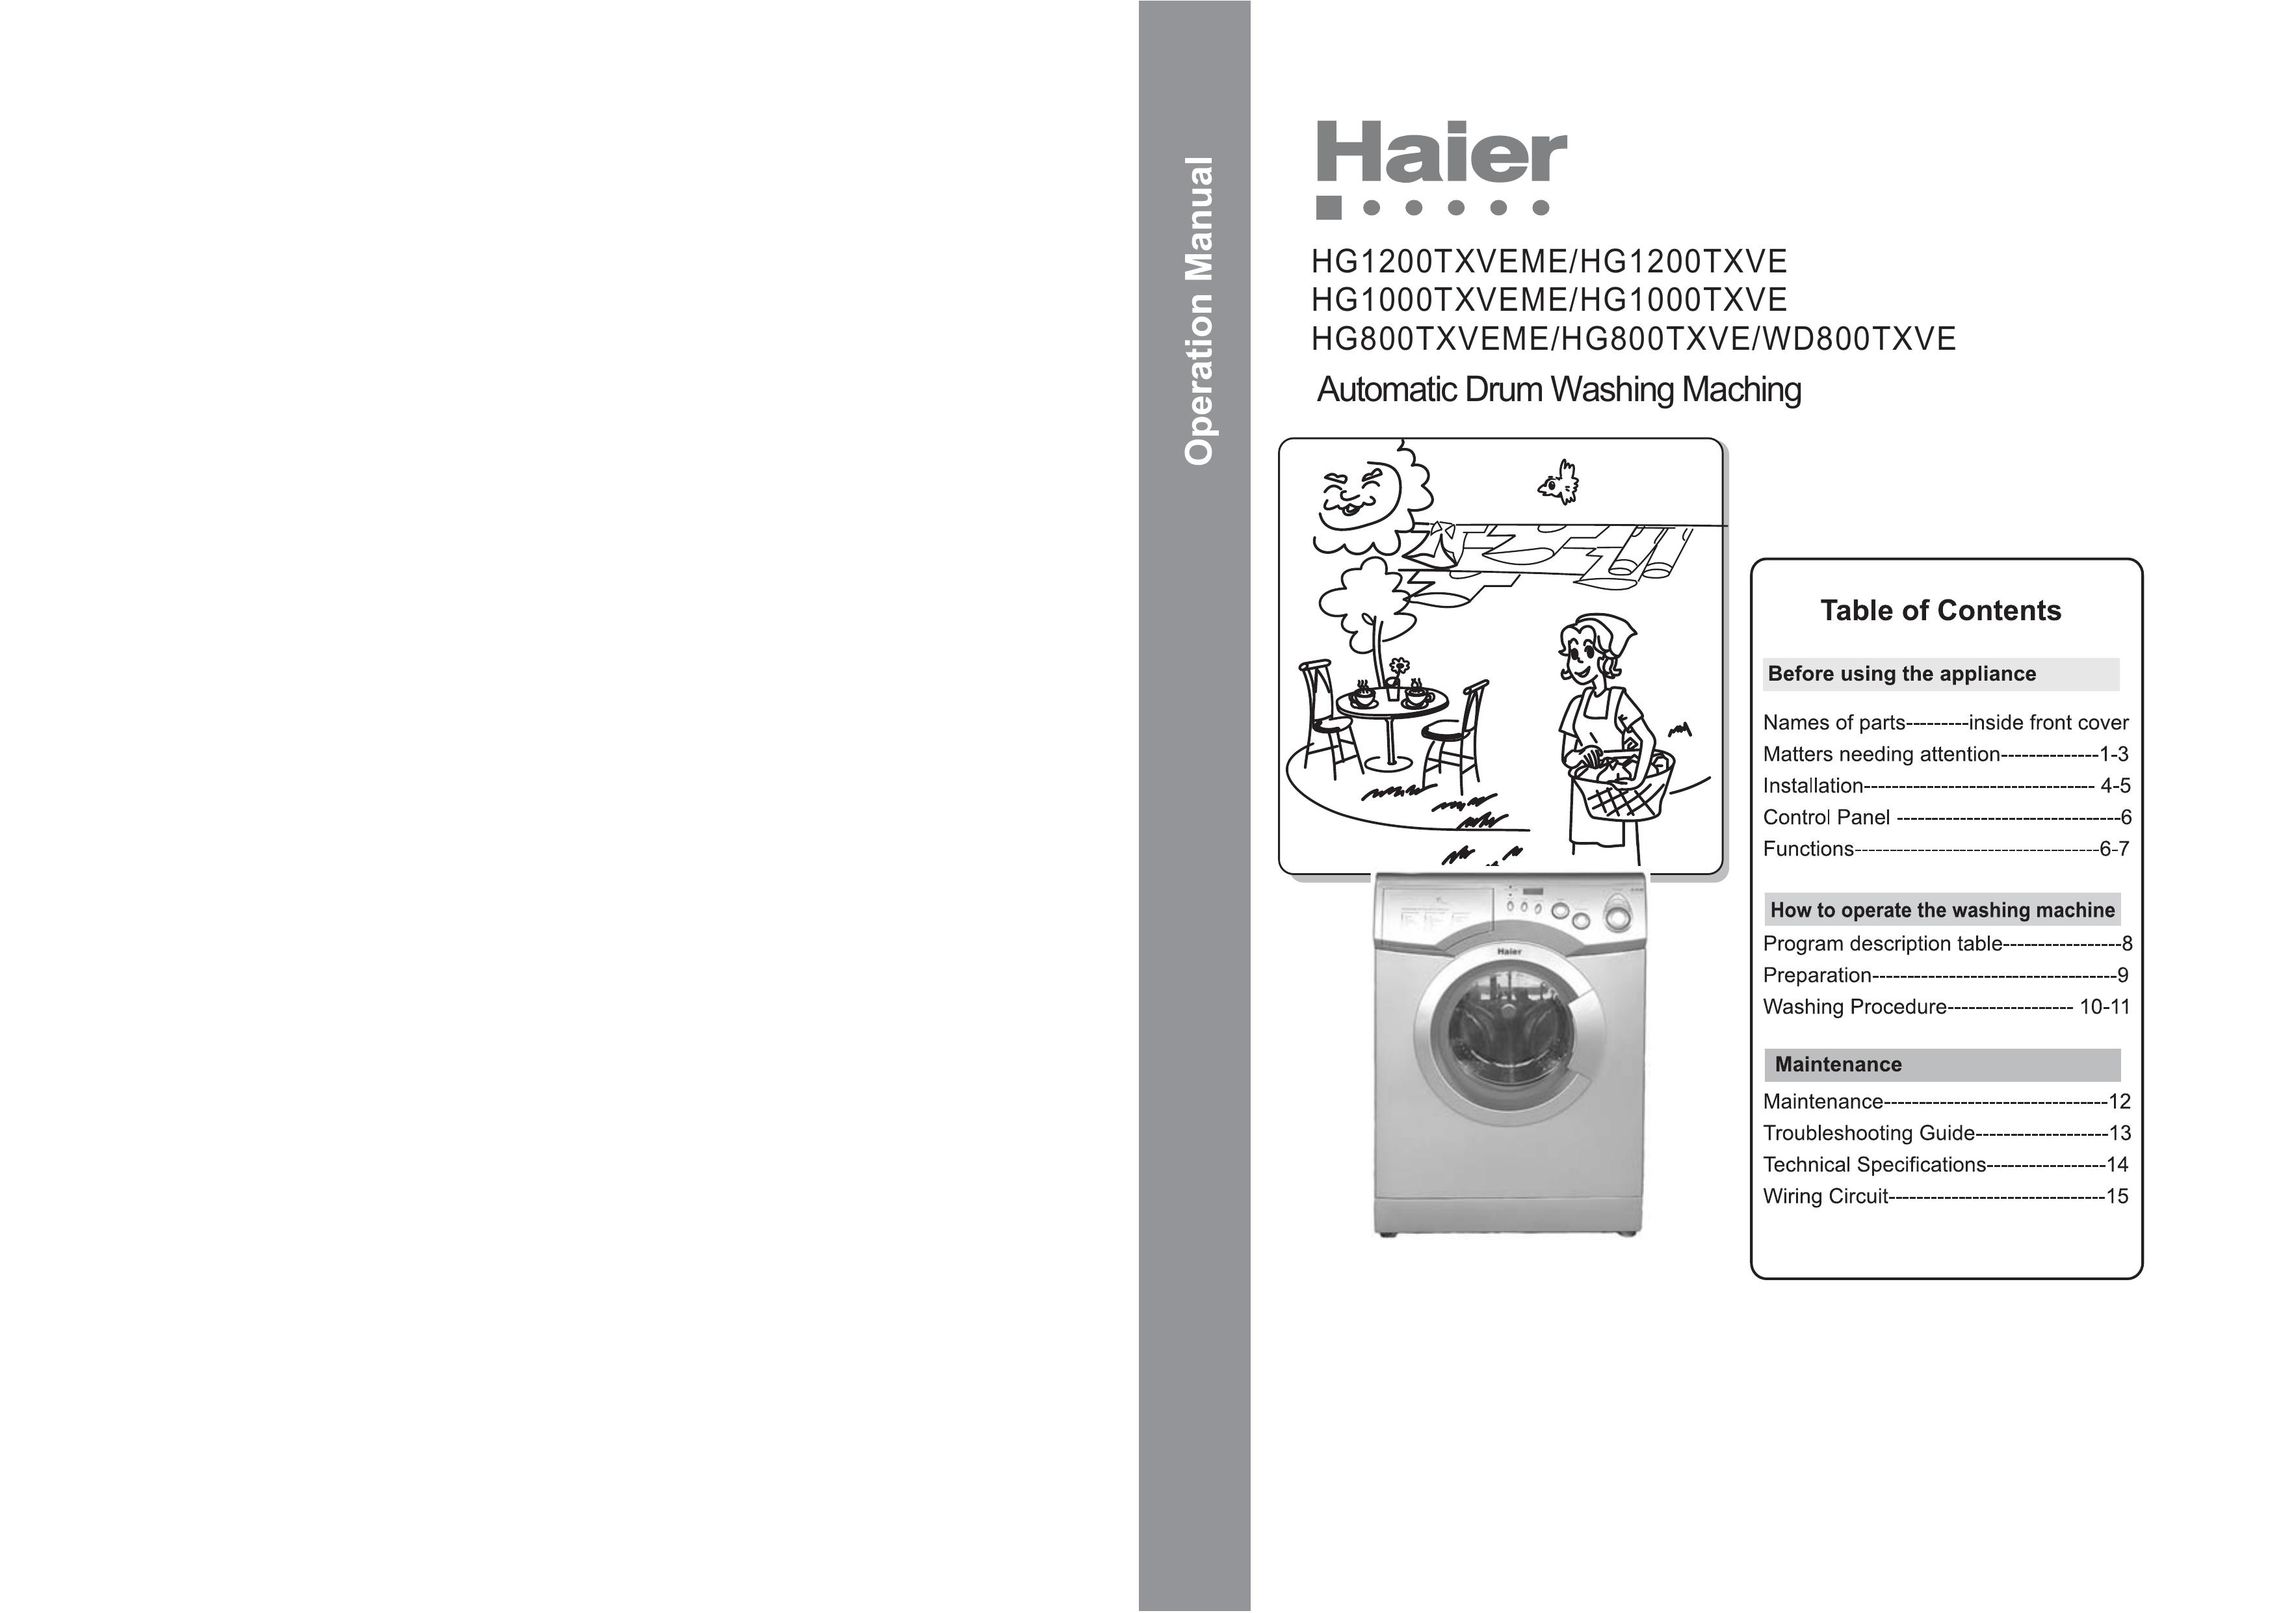 Haier WD800TXVE Sander User Manual